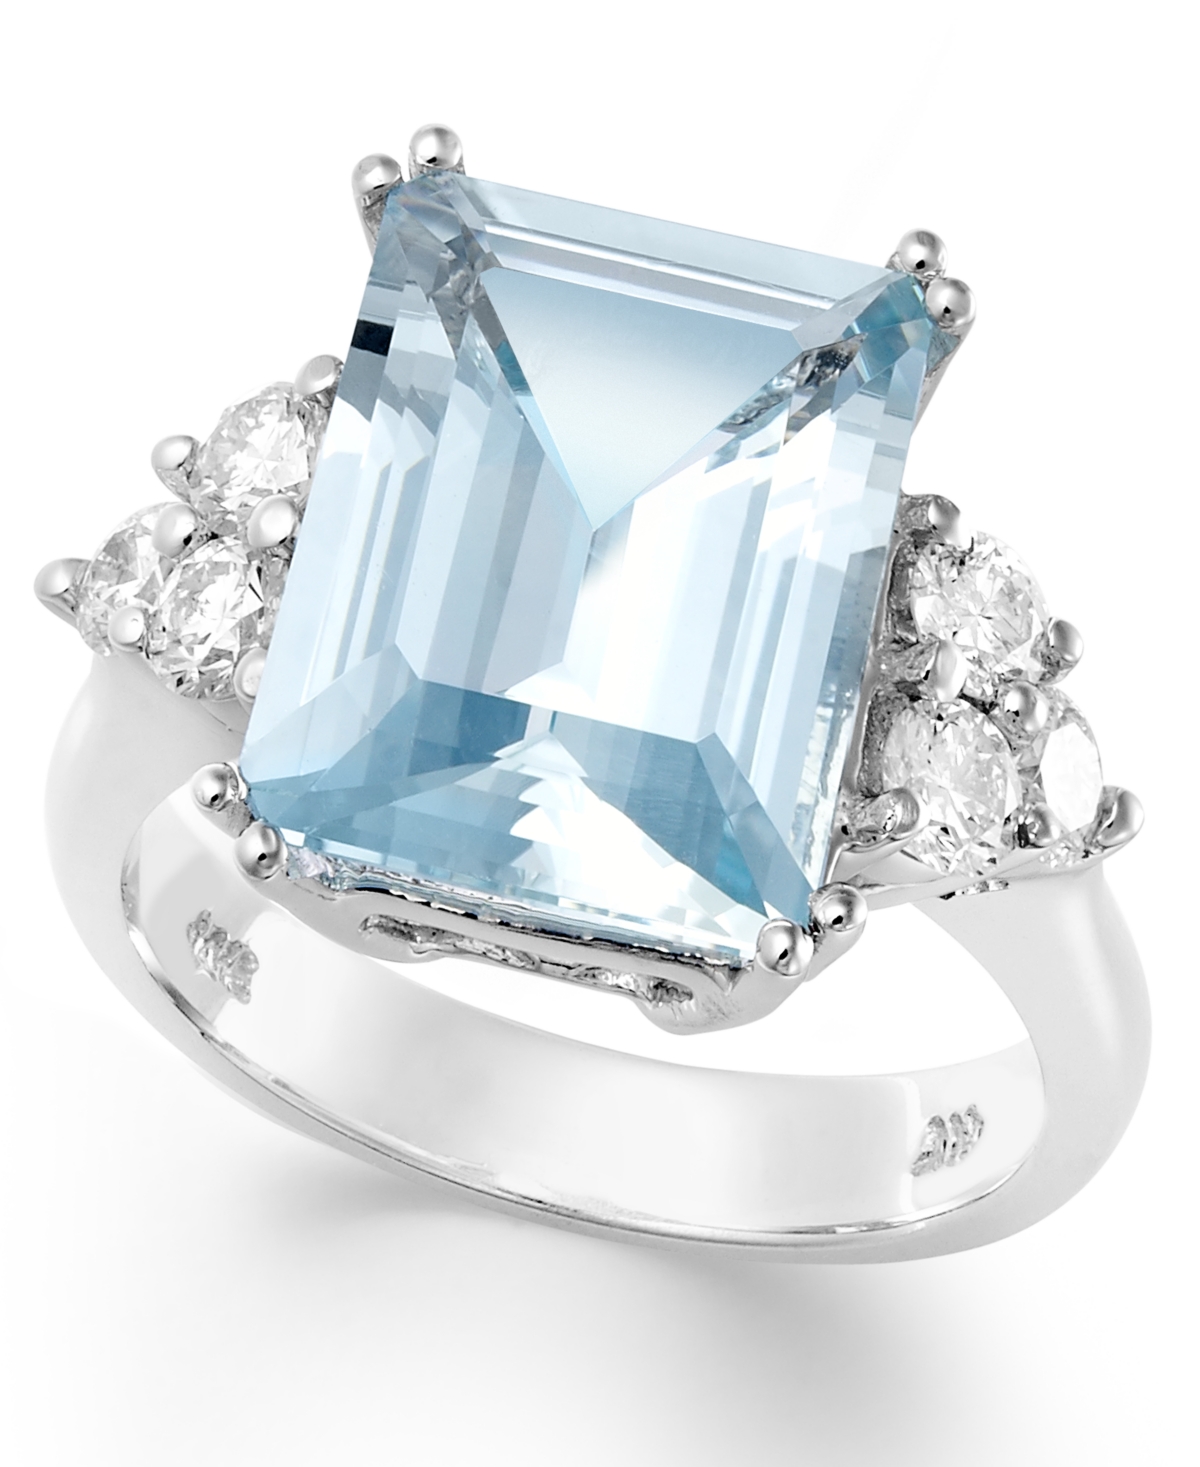 If you want blue gemstones, consider blue topaz or aquamarine ...